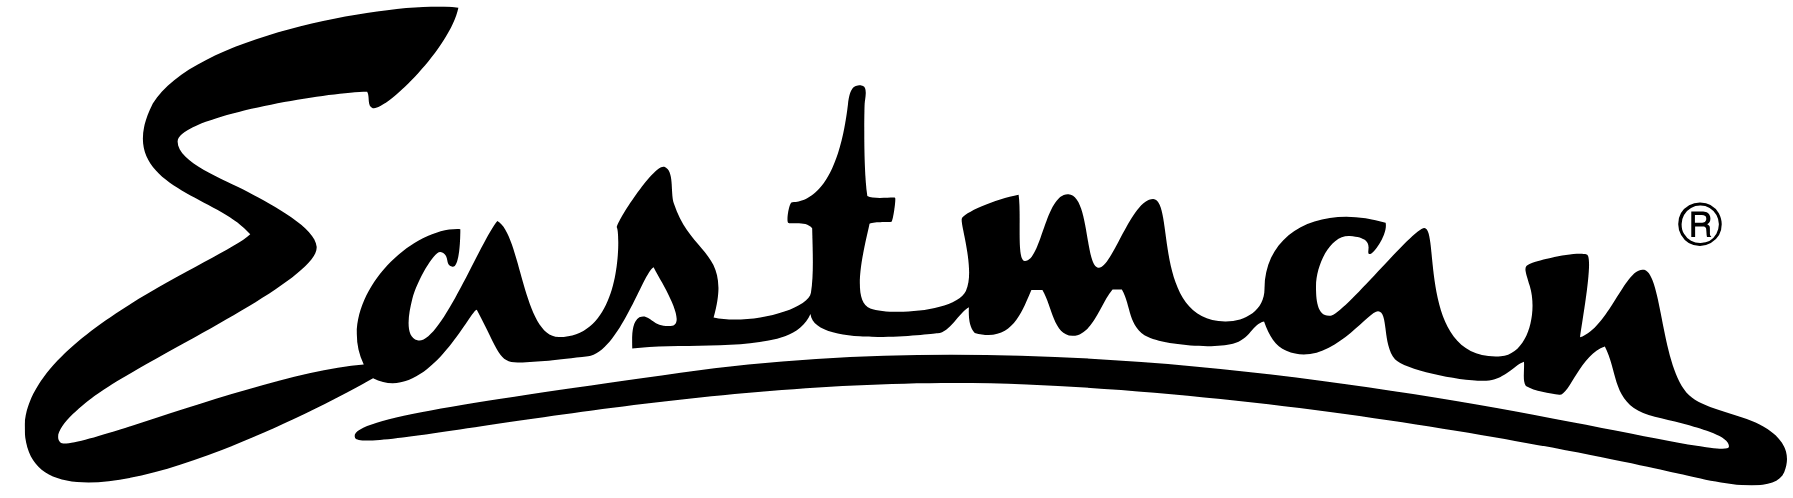 Eastman guitars logo